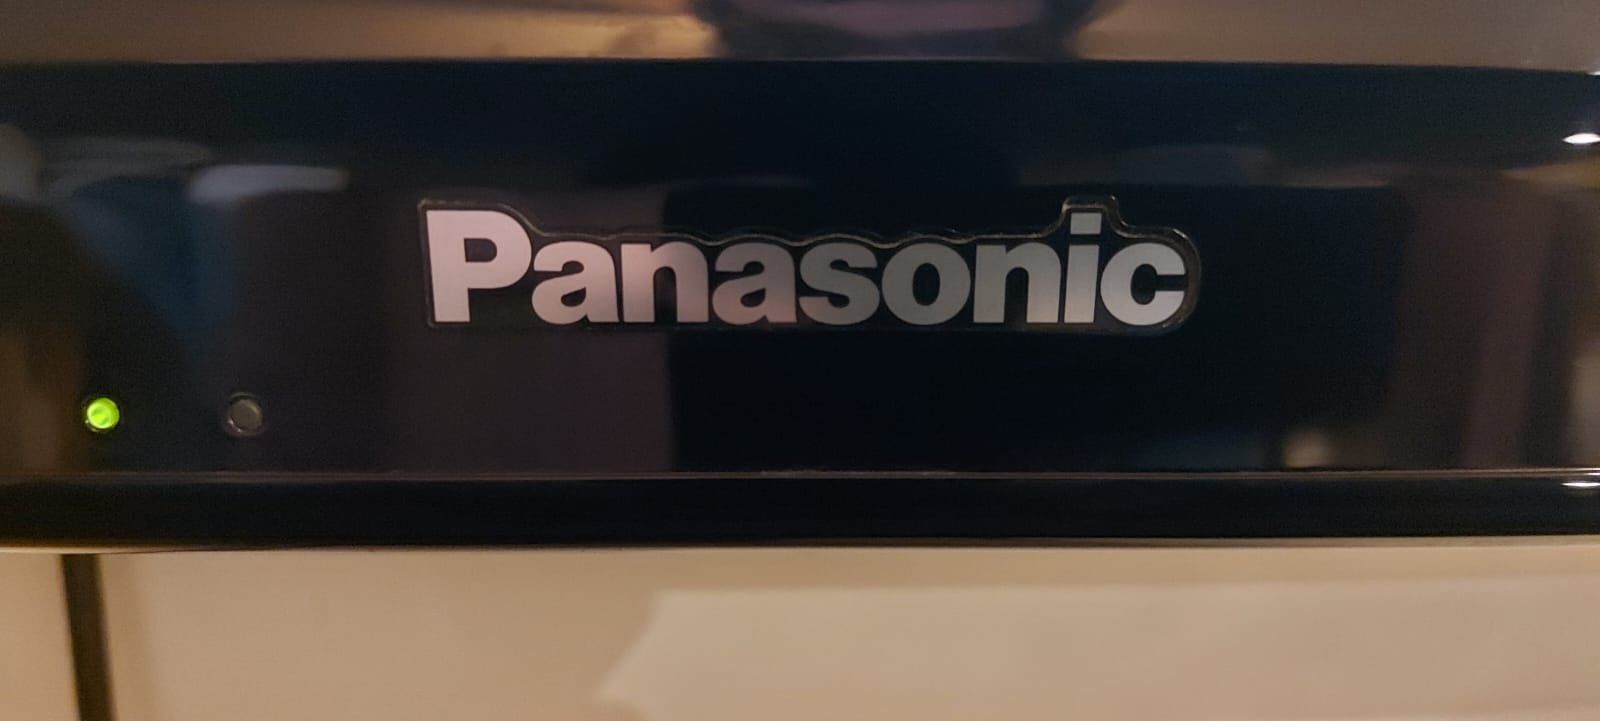 Televizor Panasonic Viera 106 cm,cu suport pentru perete + telecomanda